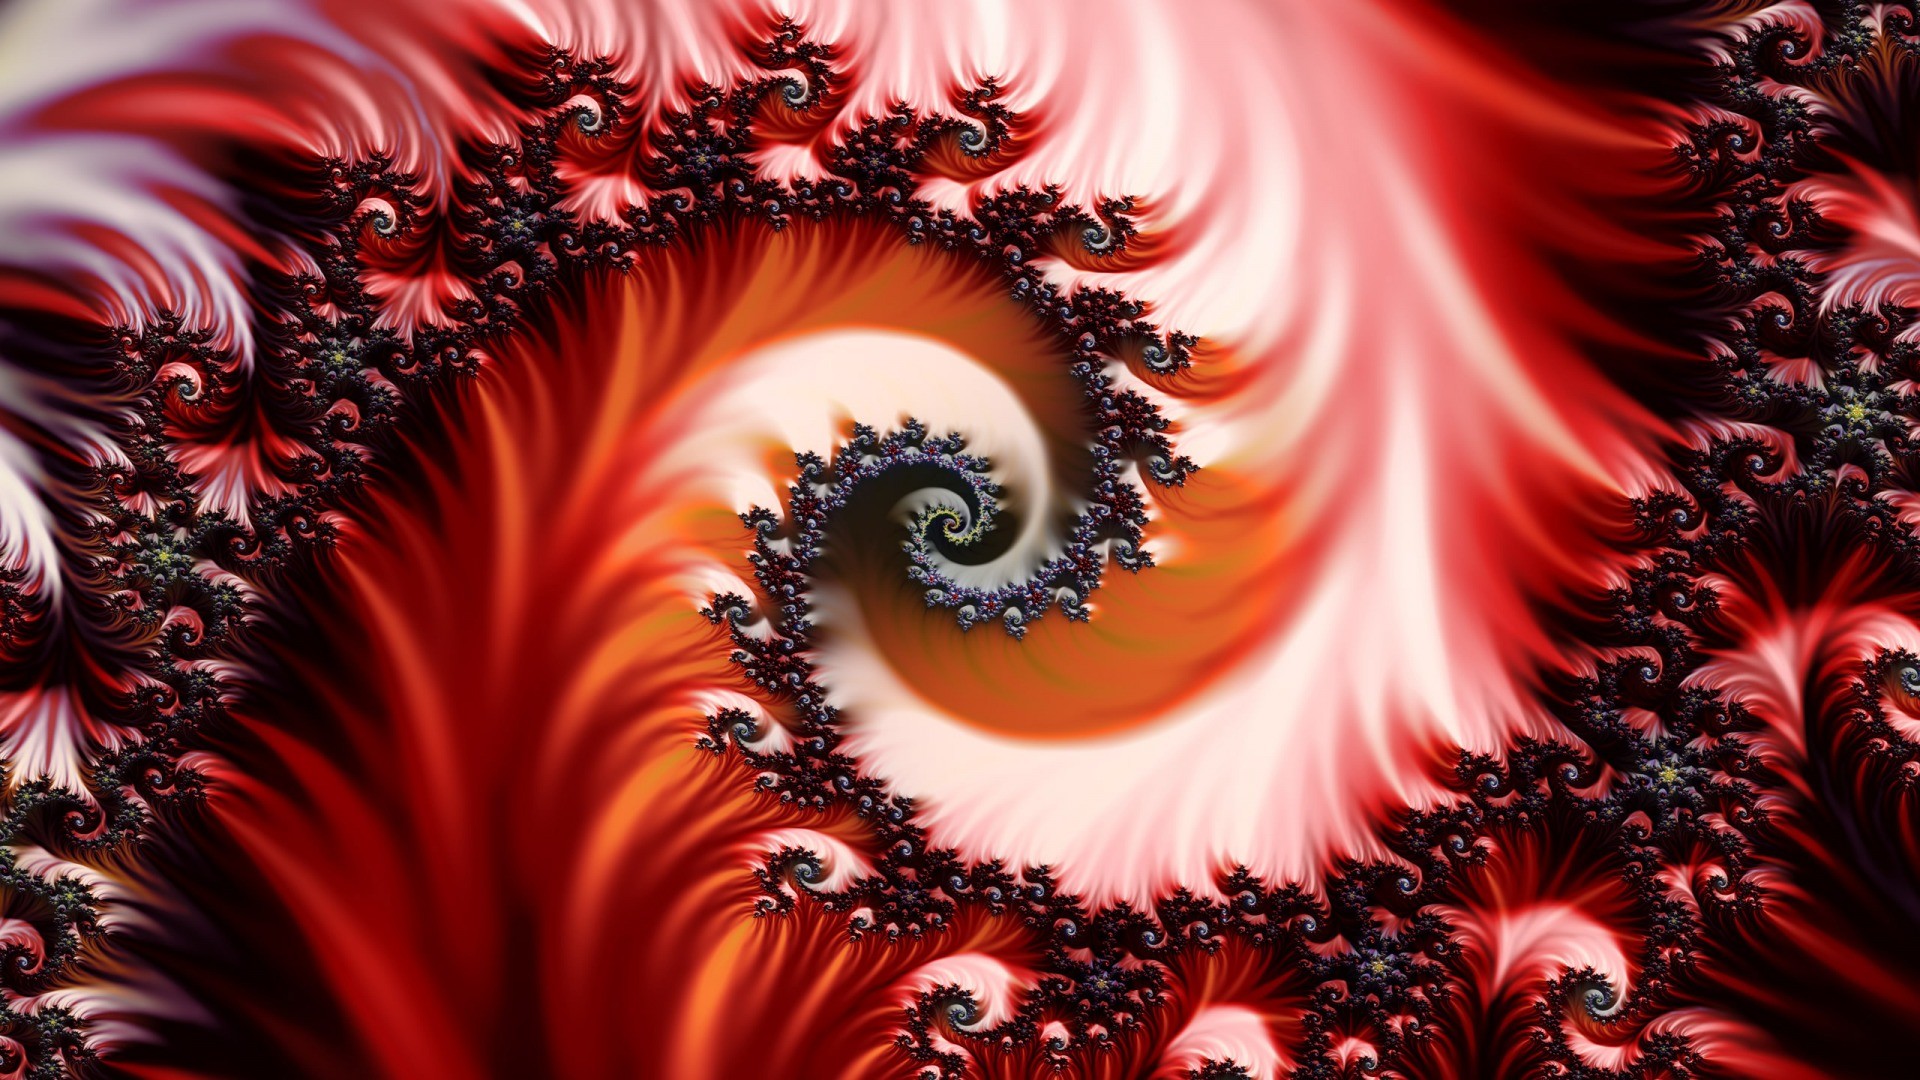 1920x1080 Image detail for -Wallpaper, fractal, red - 81368